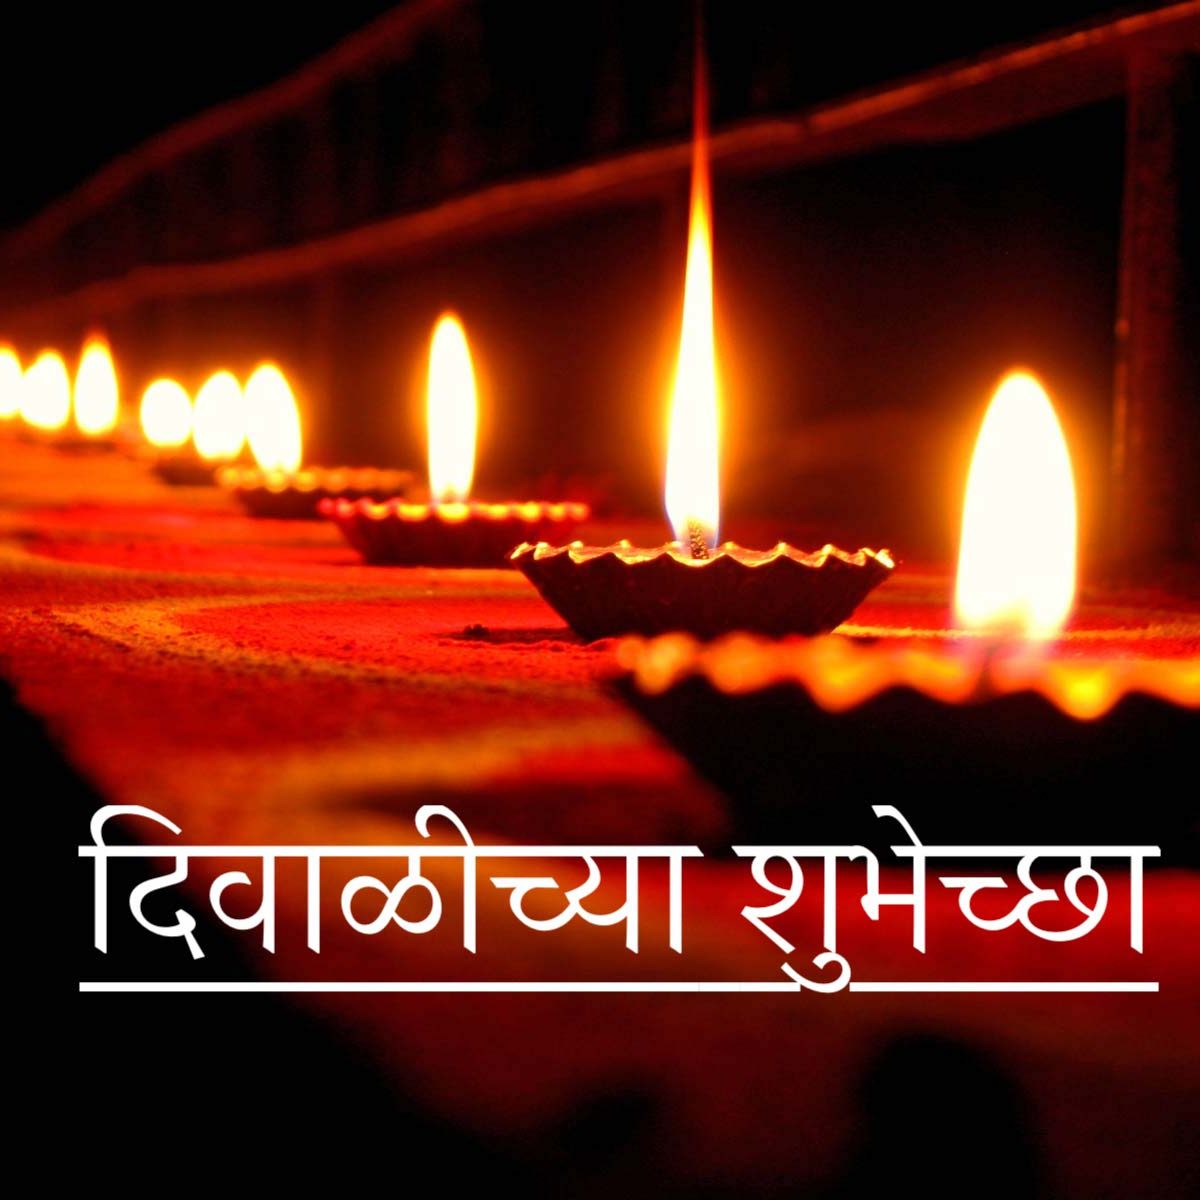 Happy Diwali in Marathi | Dekh News Hindi